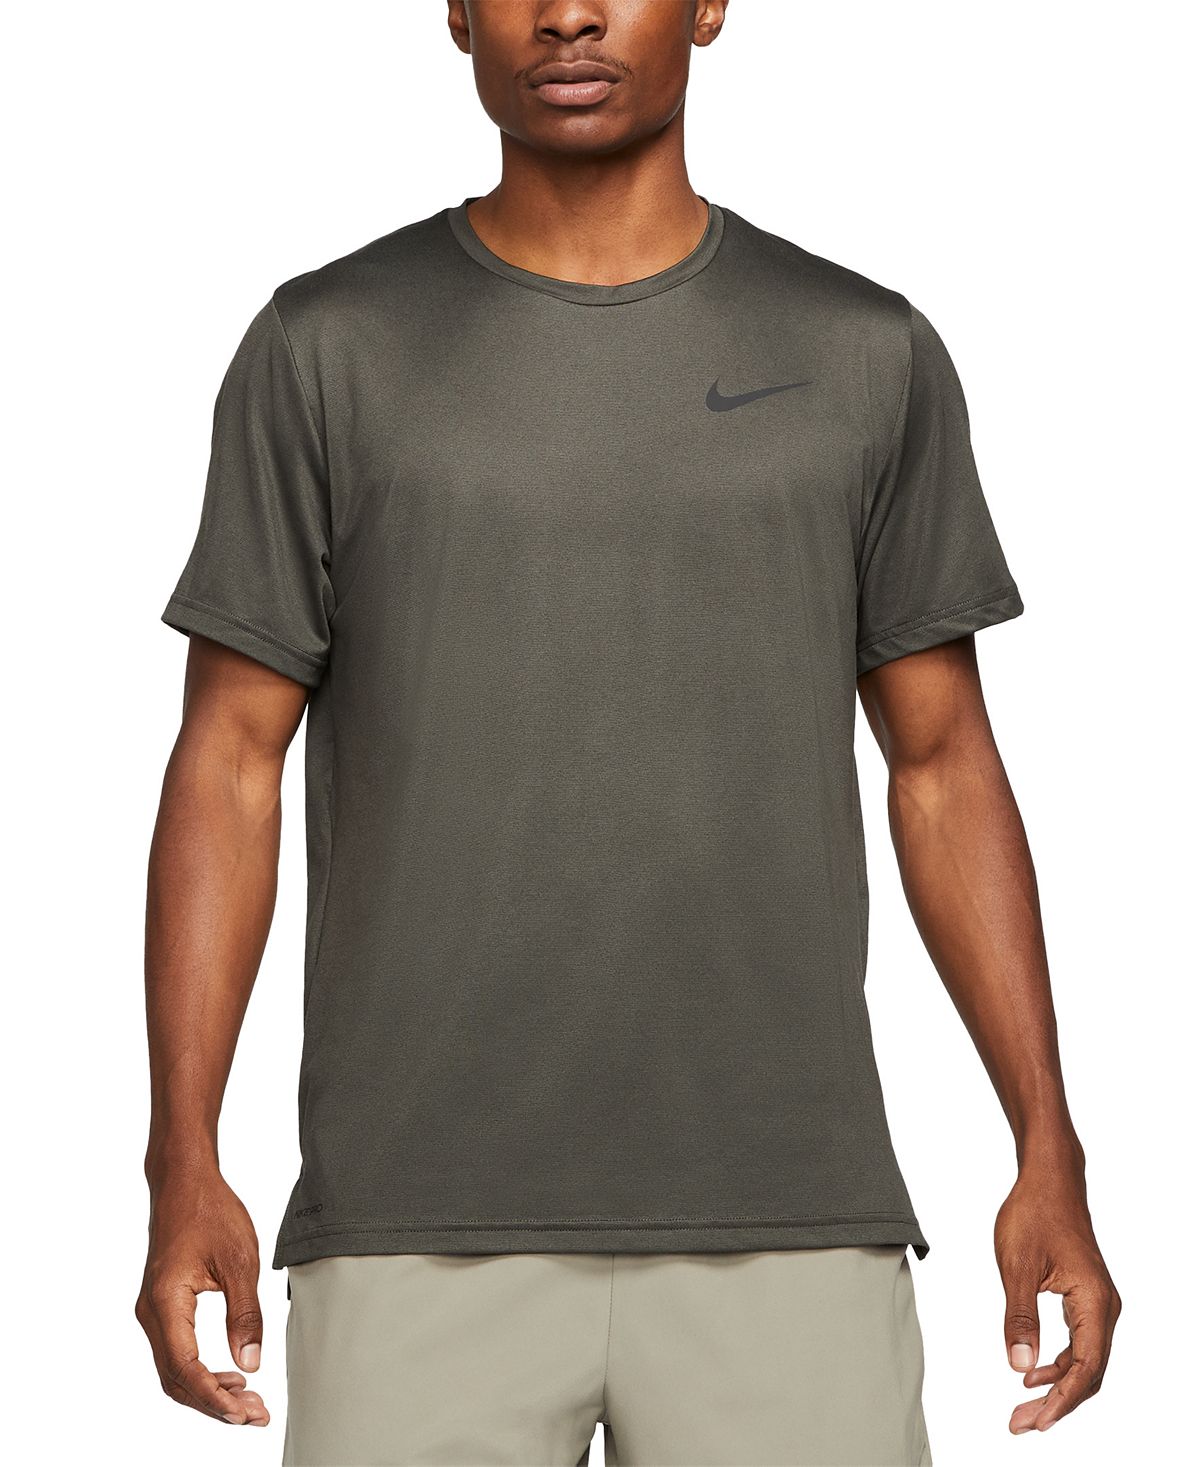 Nike Hyperdry Training T-shirt Sequoia